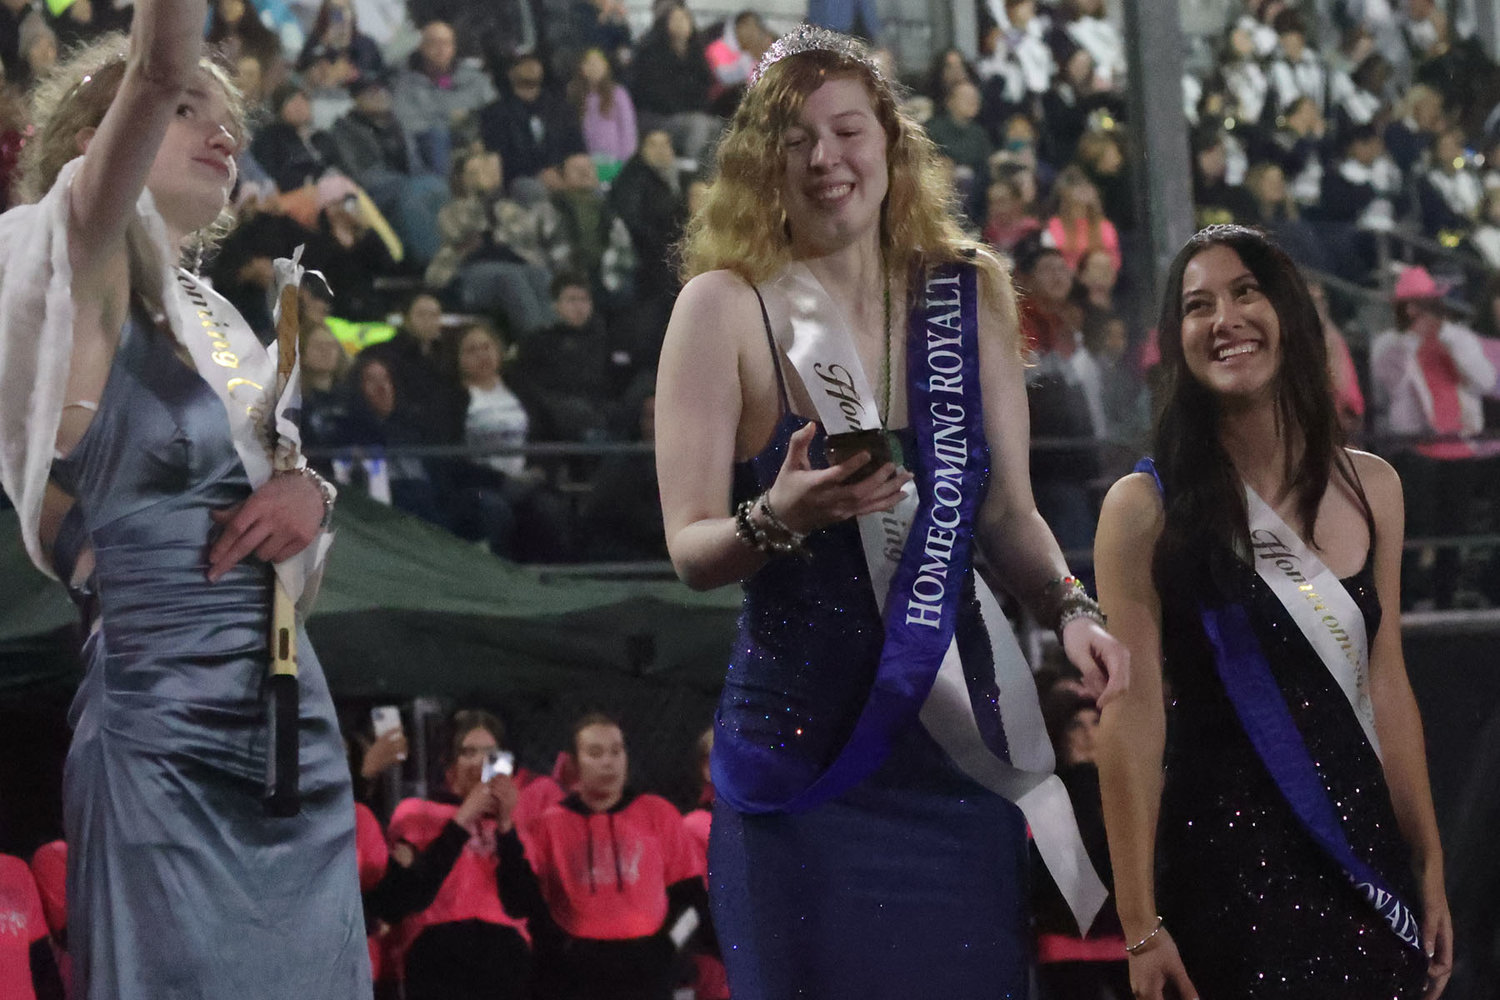 River Ridge High School has two queens: Kiona Kautz (center) and Leno Le (right).